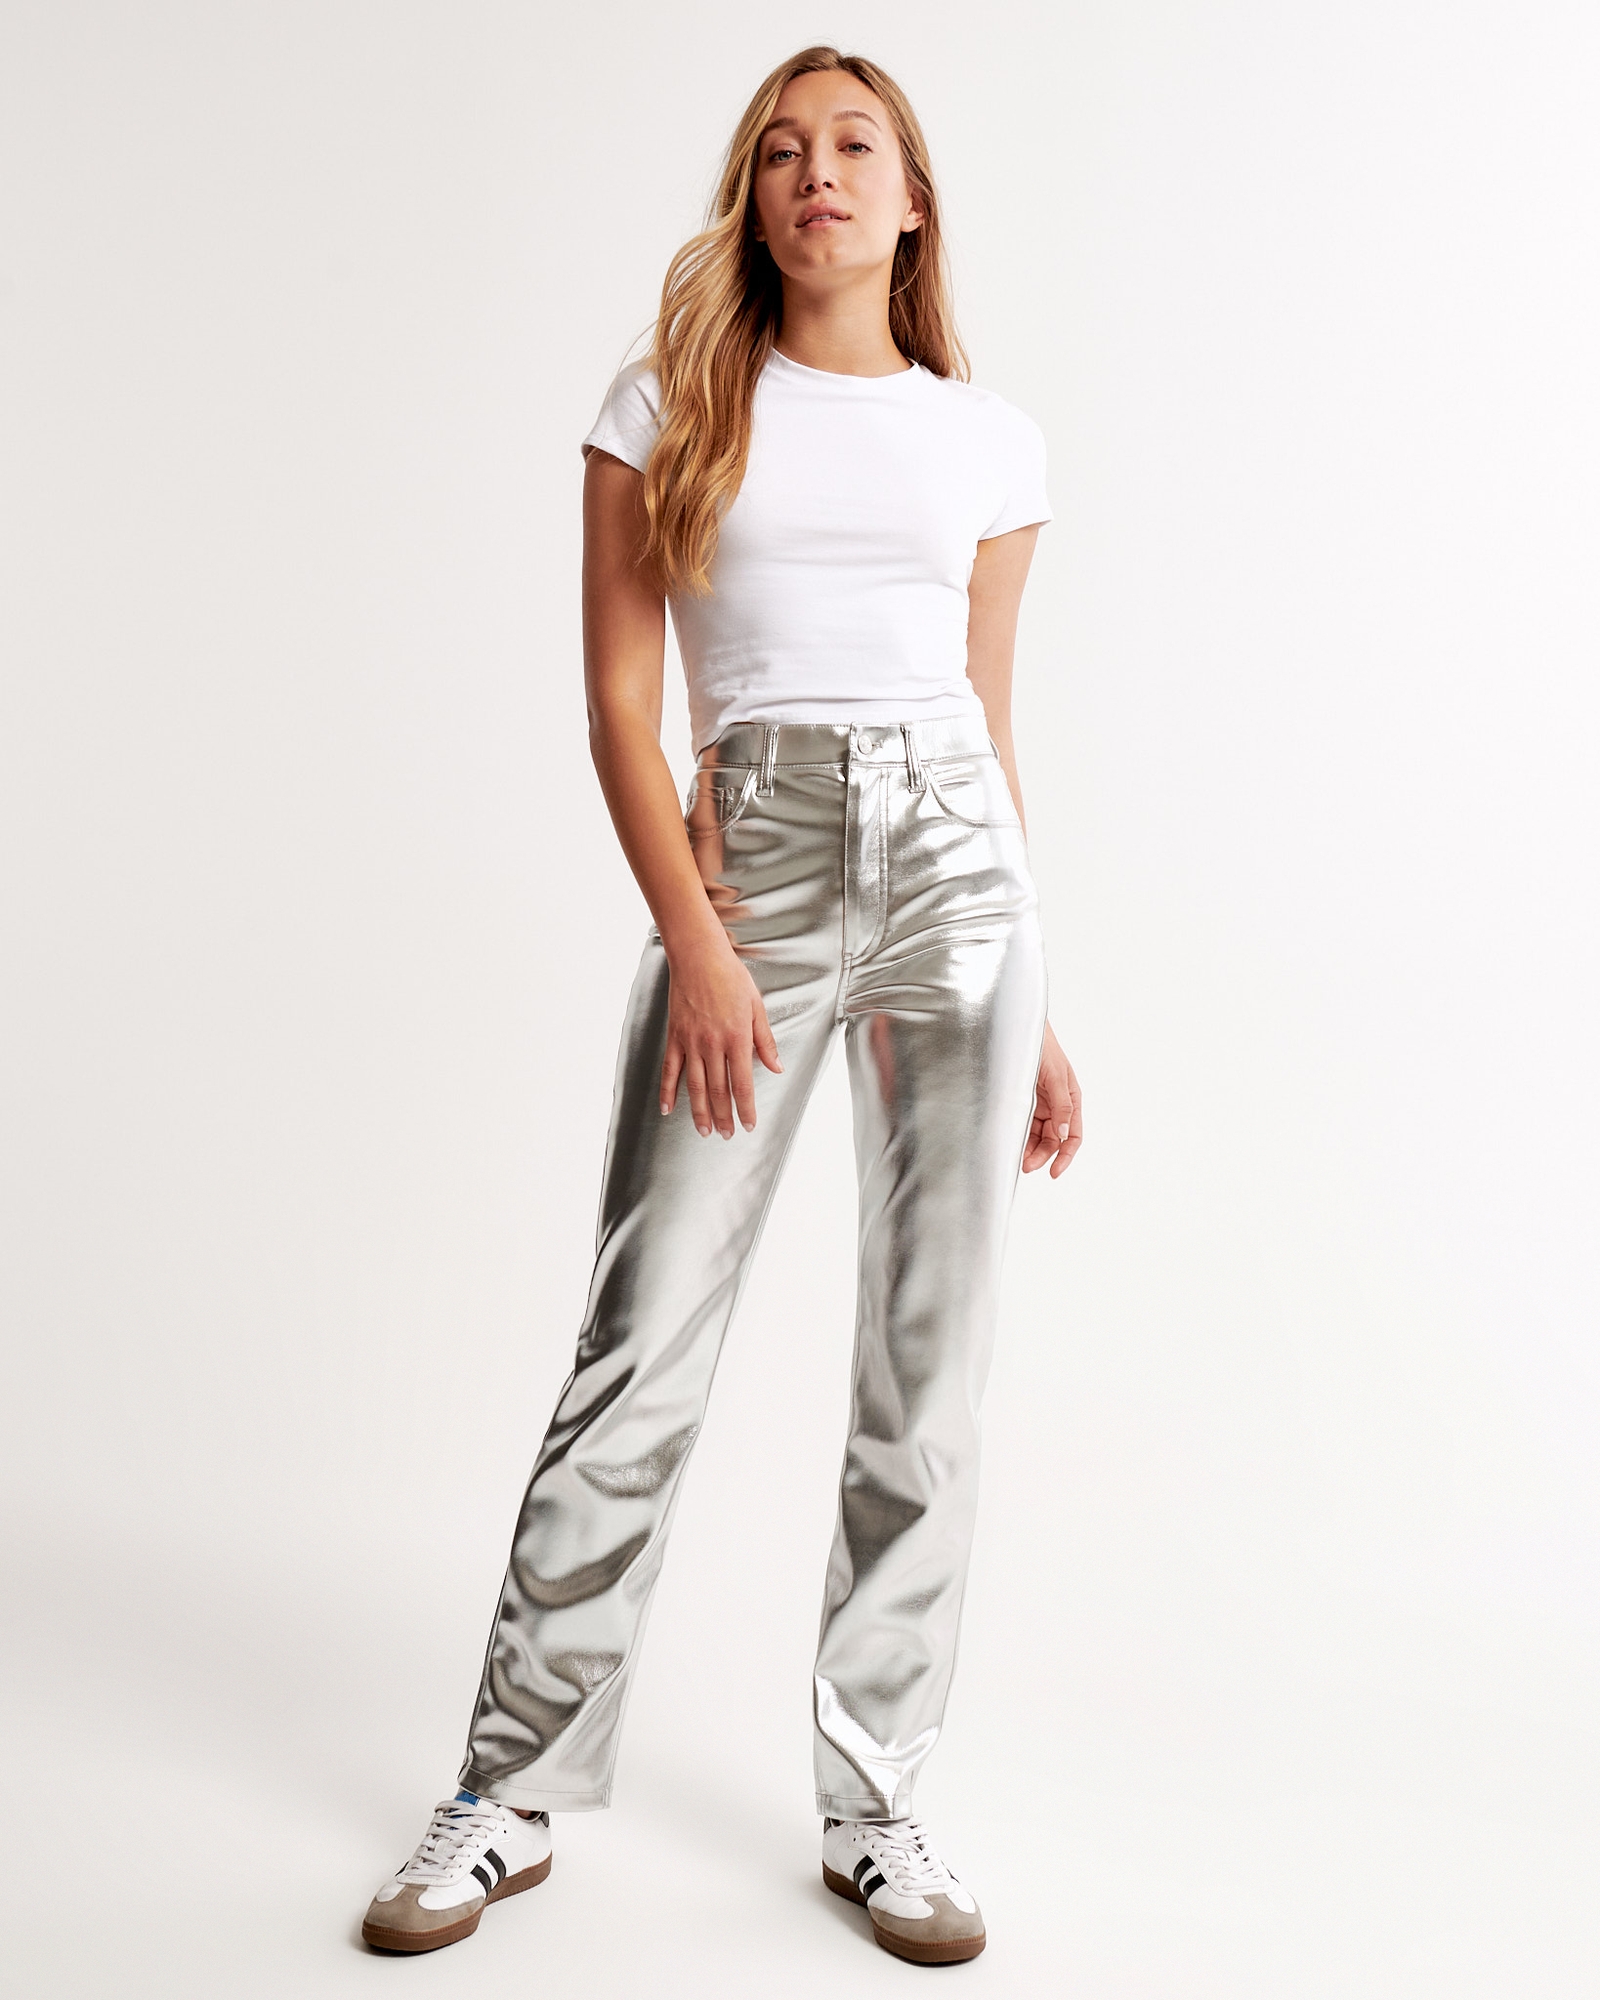 Silver Metallic Pants - Vegan Leather Pants - Straight Leg Pants - Lulus